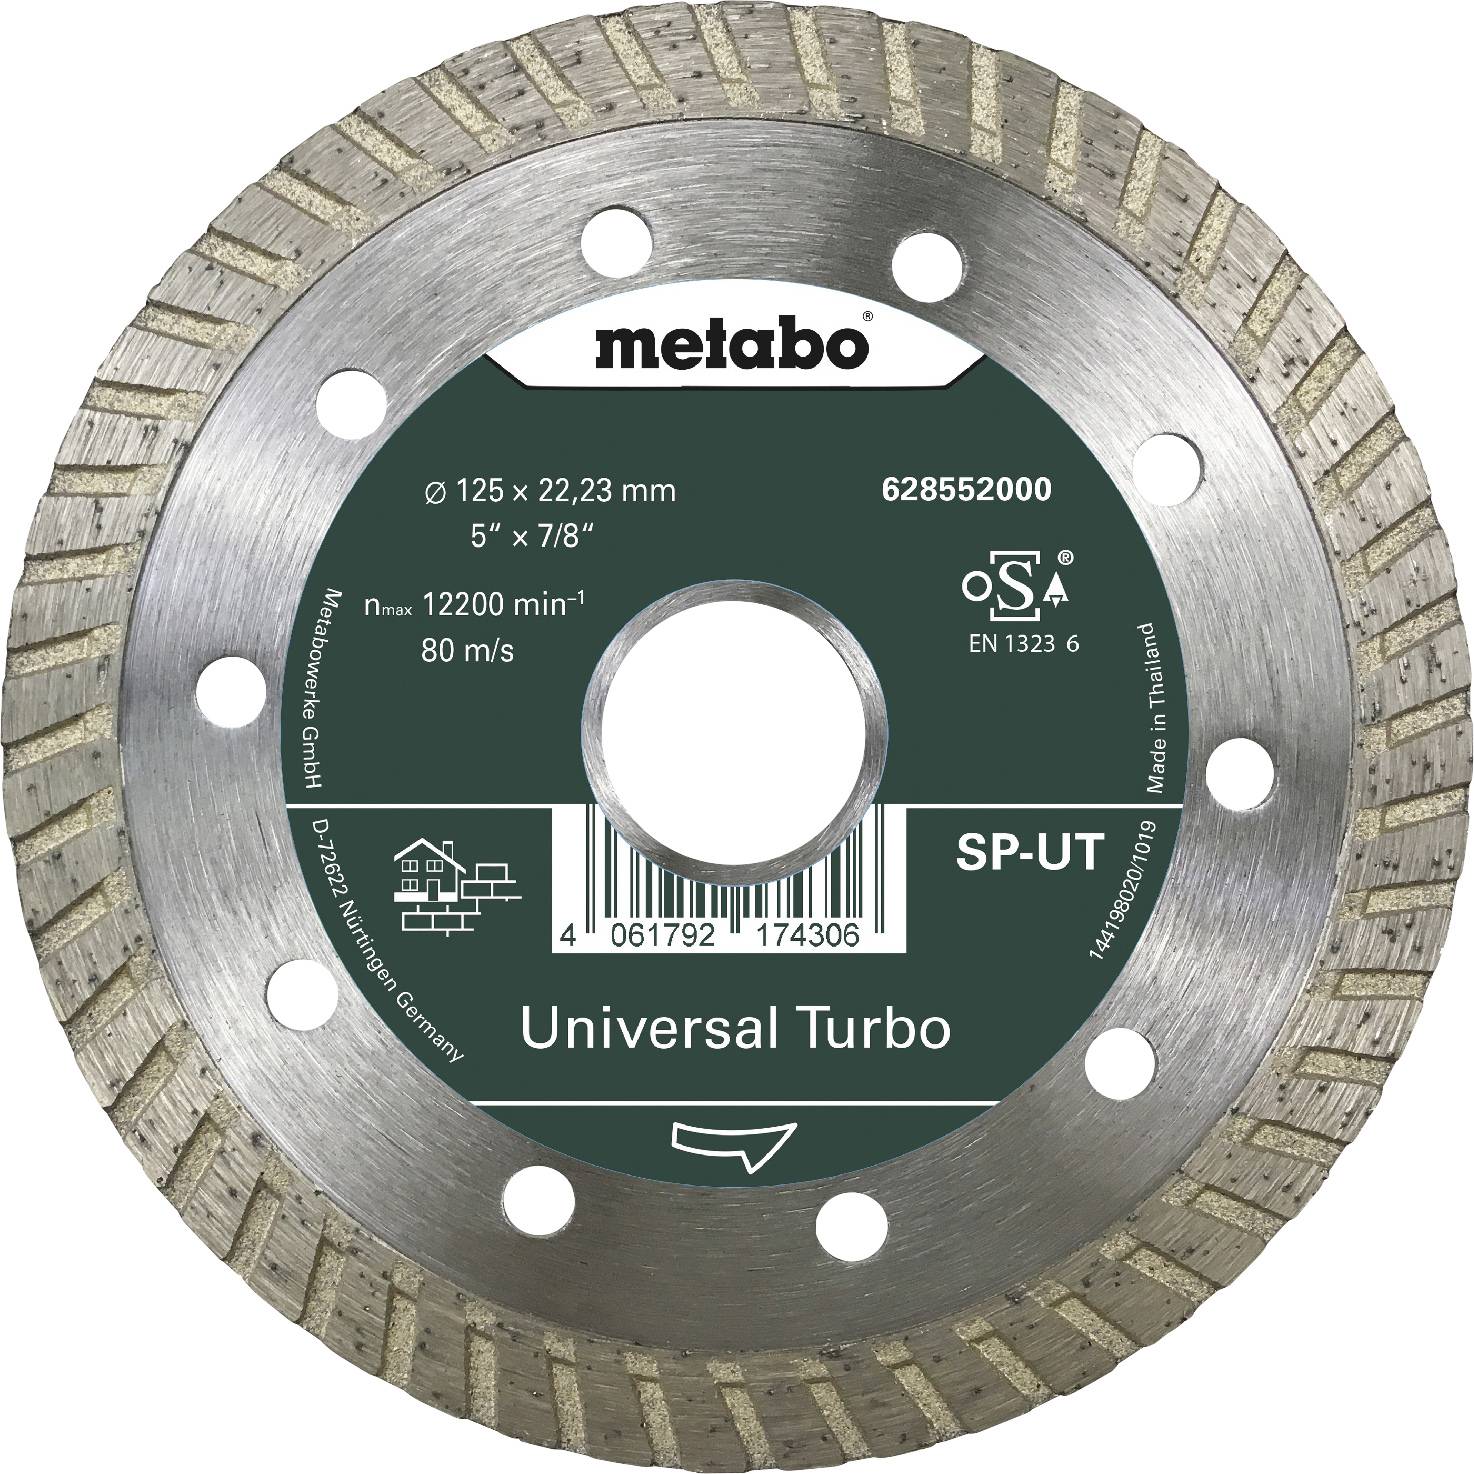 METABO Dia-TS 125x22,23mm,SP-UT,Universal,Turbo Metabo 628552000 Durchmesser 125 mm 1 St.